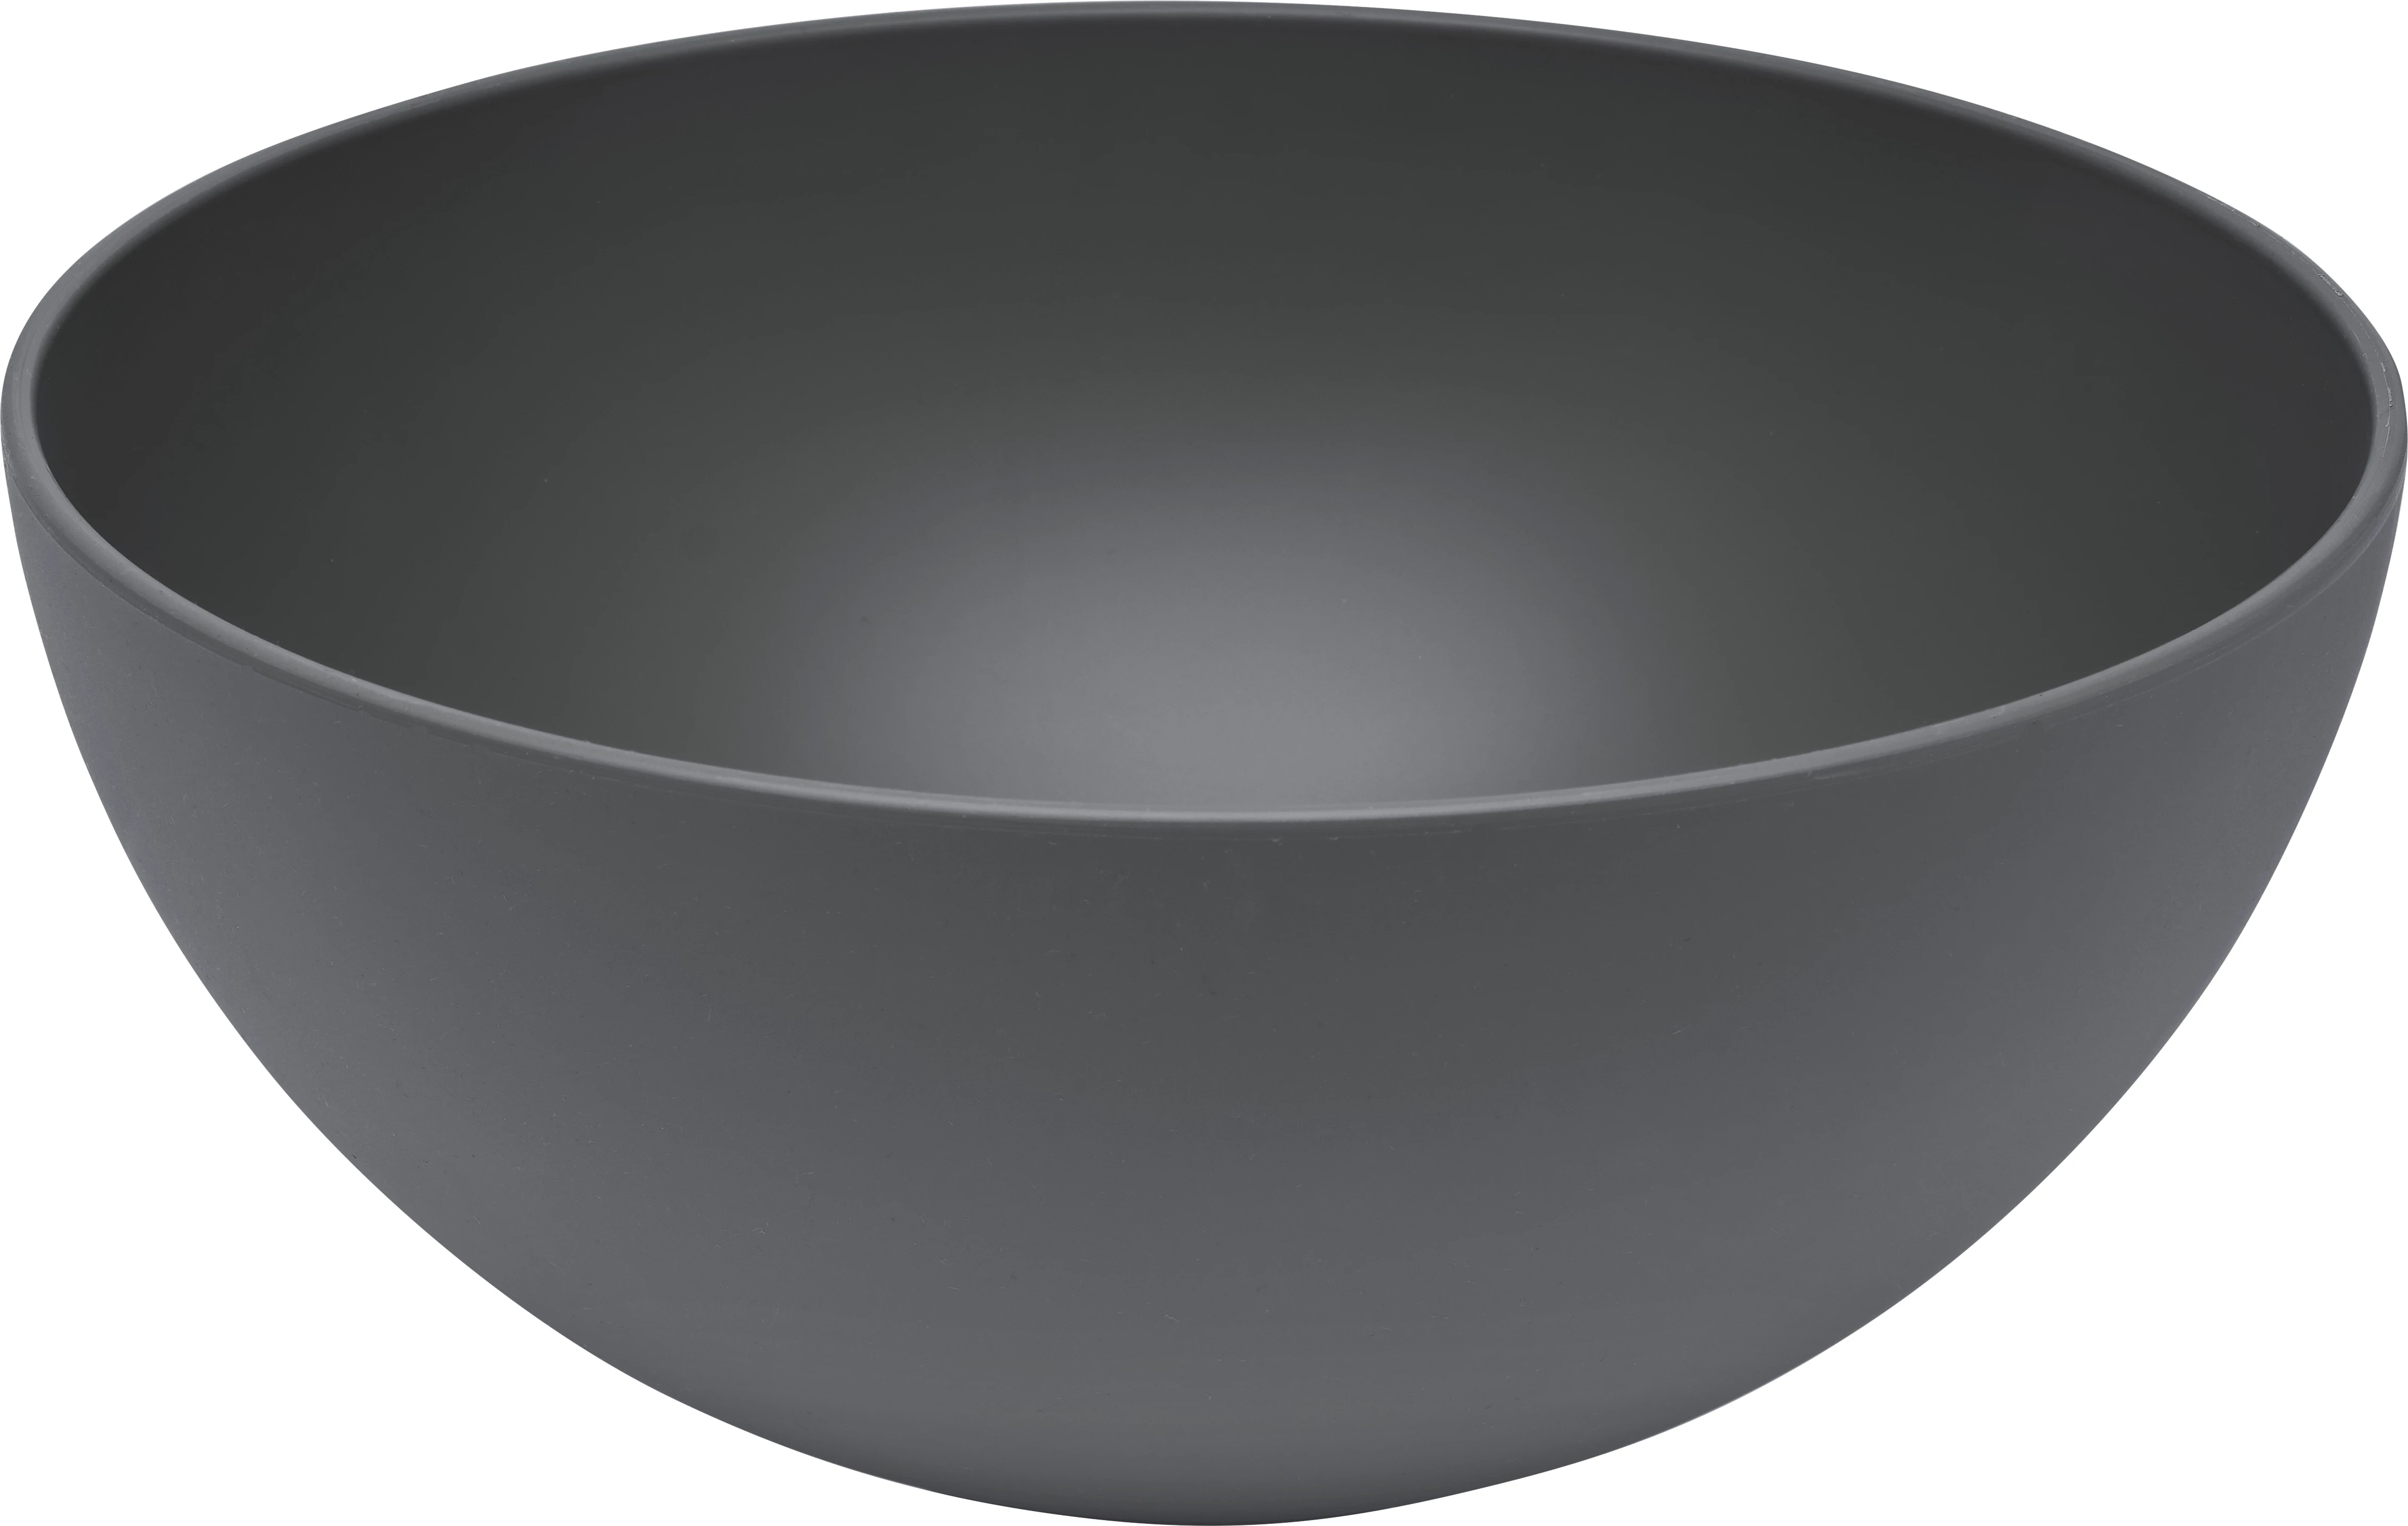 Magu skål, mørkegrå, 250 cl, ø26 cm